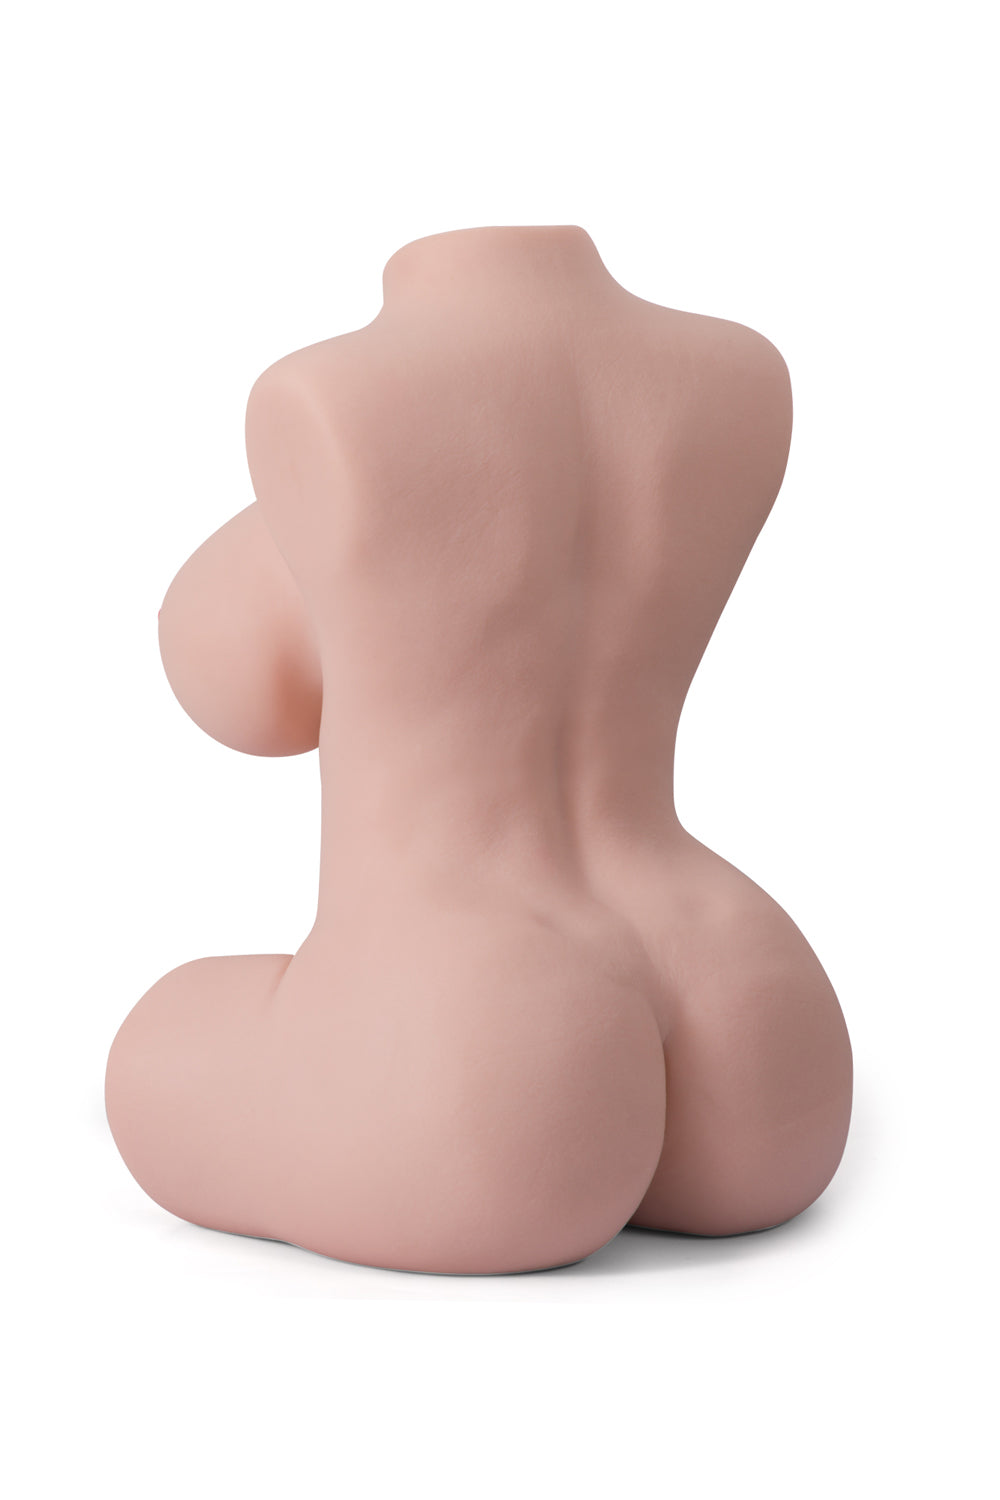 US Stock - TPE Real Life Best Half Body Sex Doll Torso Masturbator With Big Breast For Man